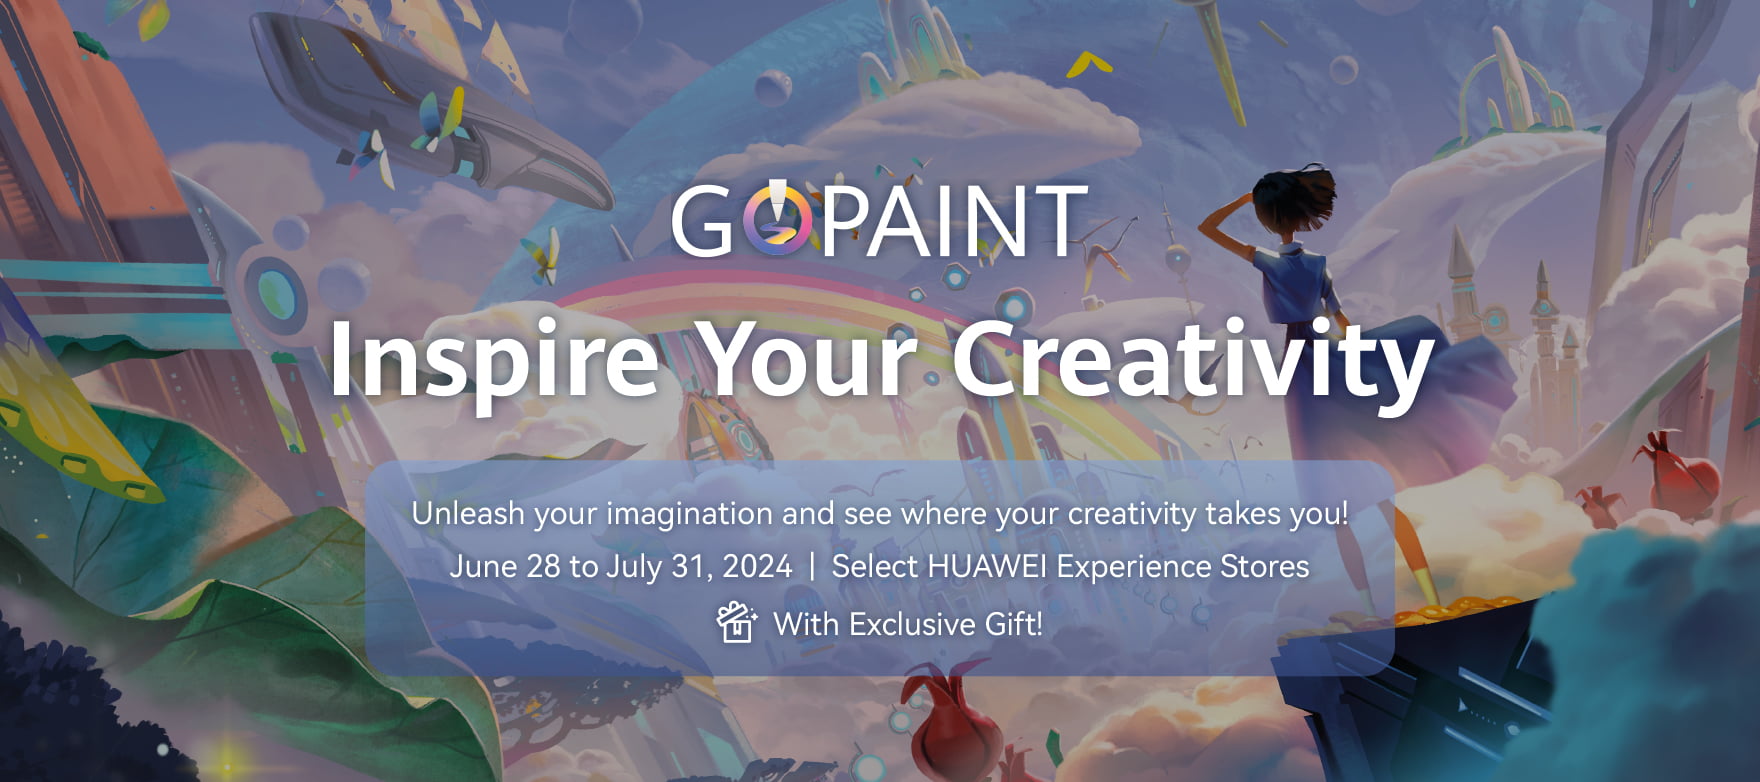 GoPaint inspire your creativity registration